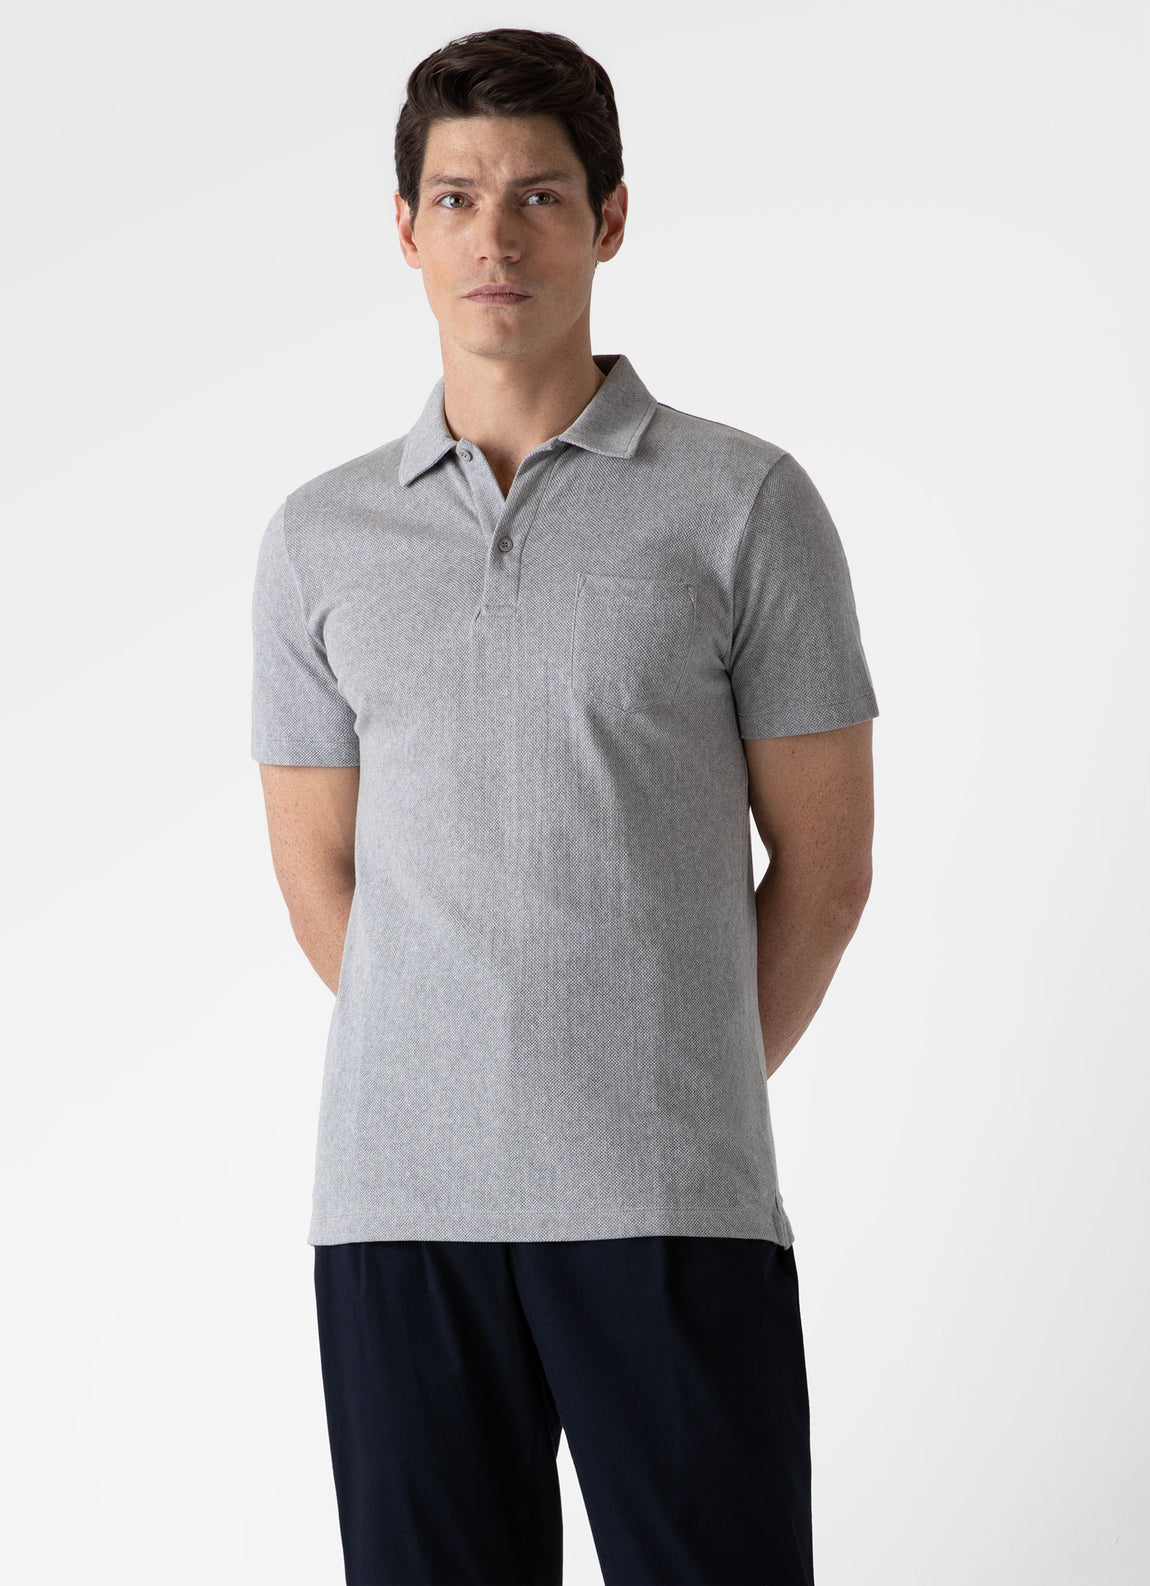 Men's Riviera Polo Shirt in Grey Melange | Sunspel